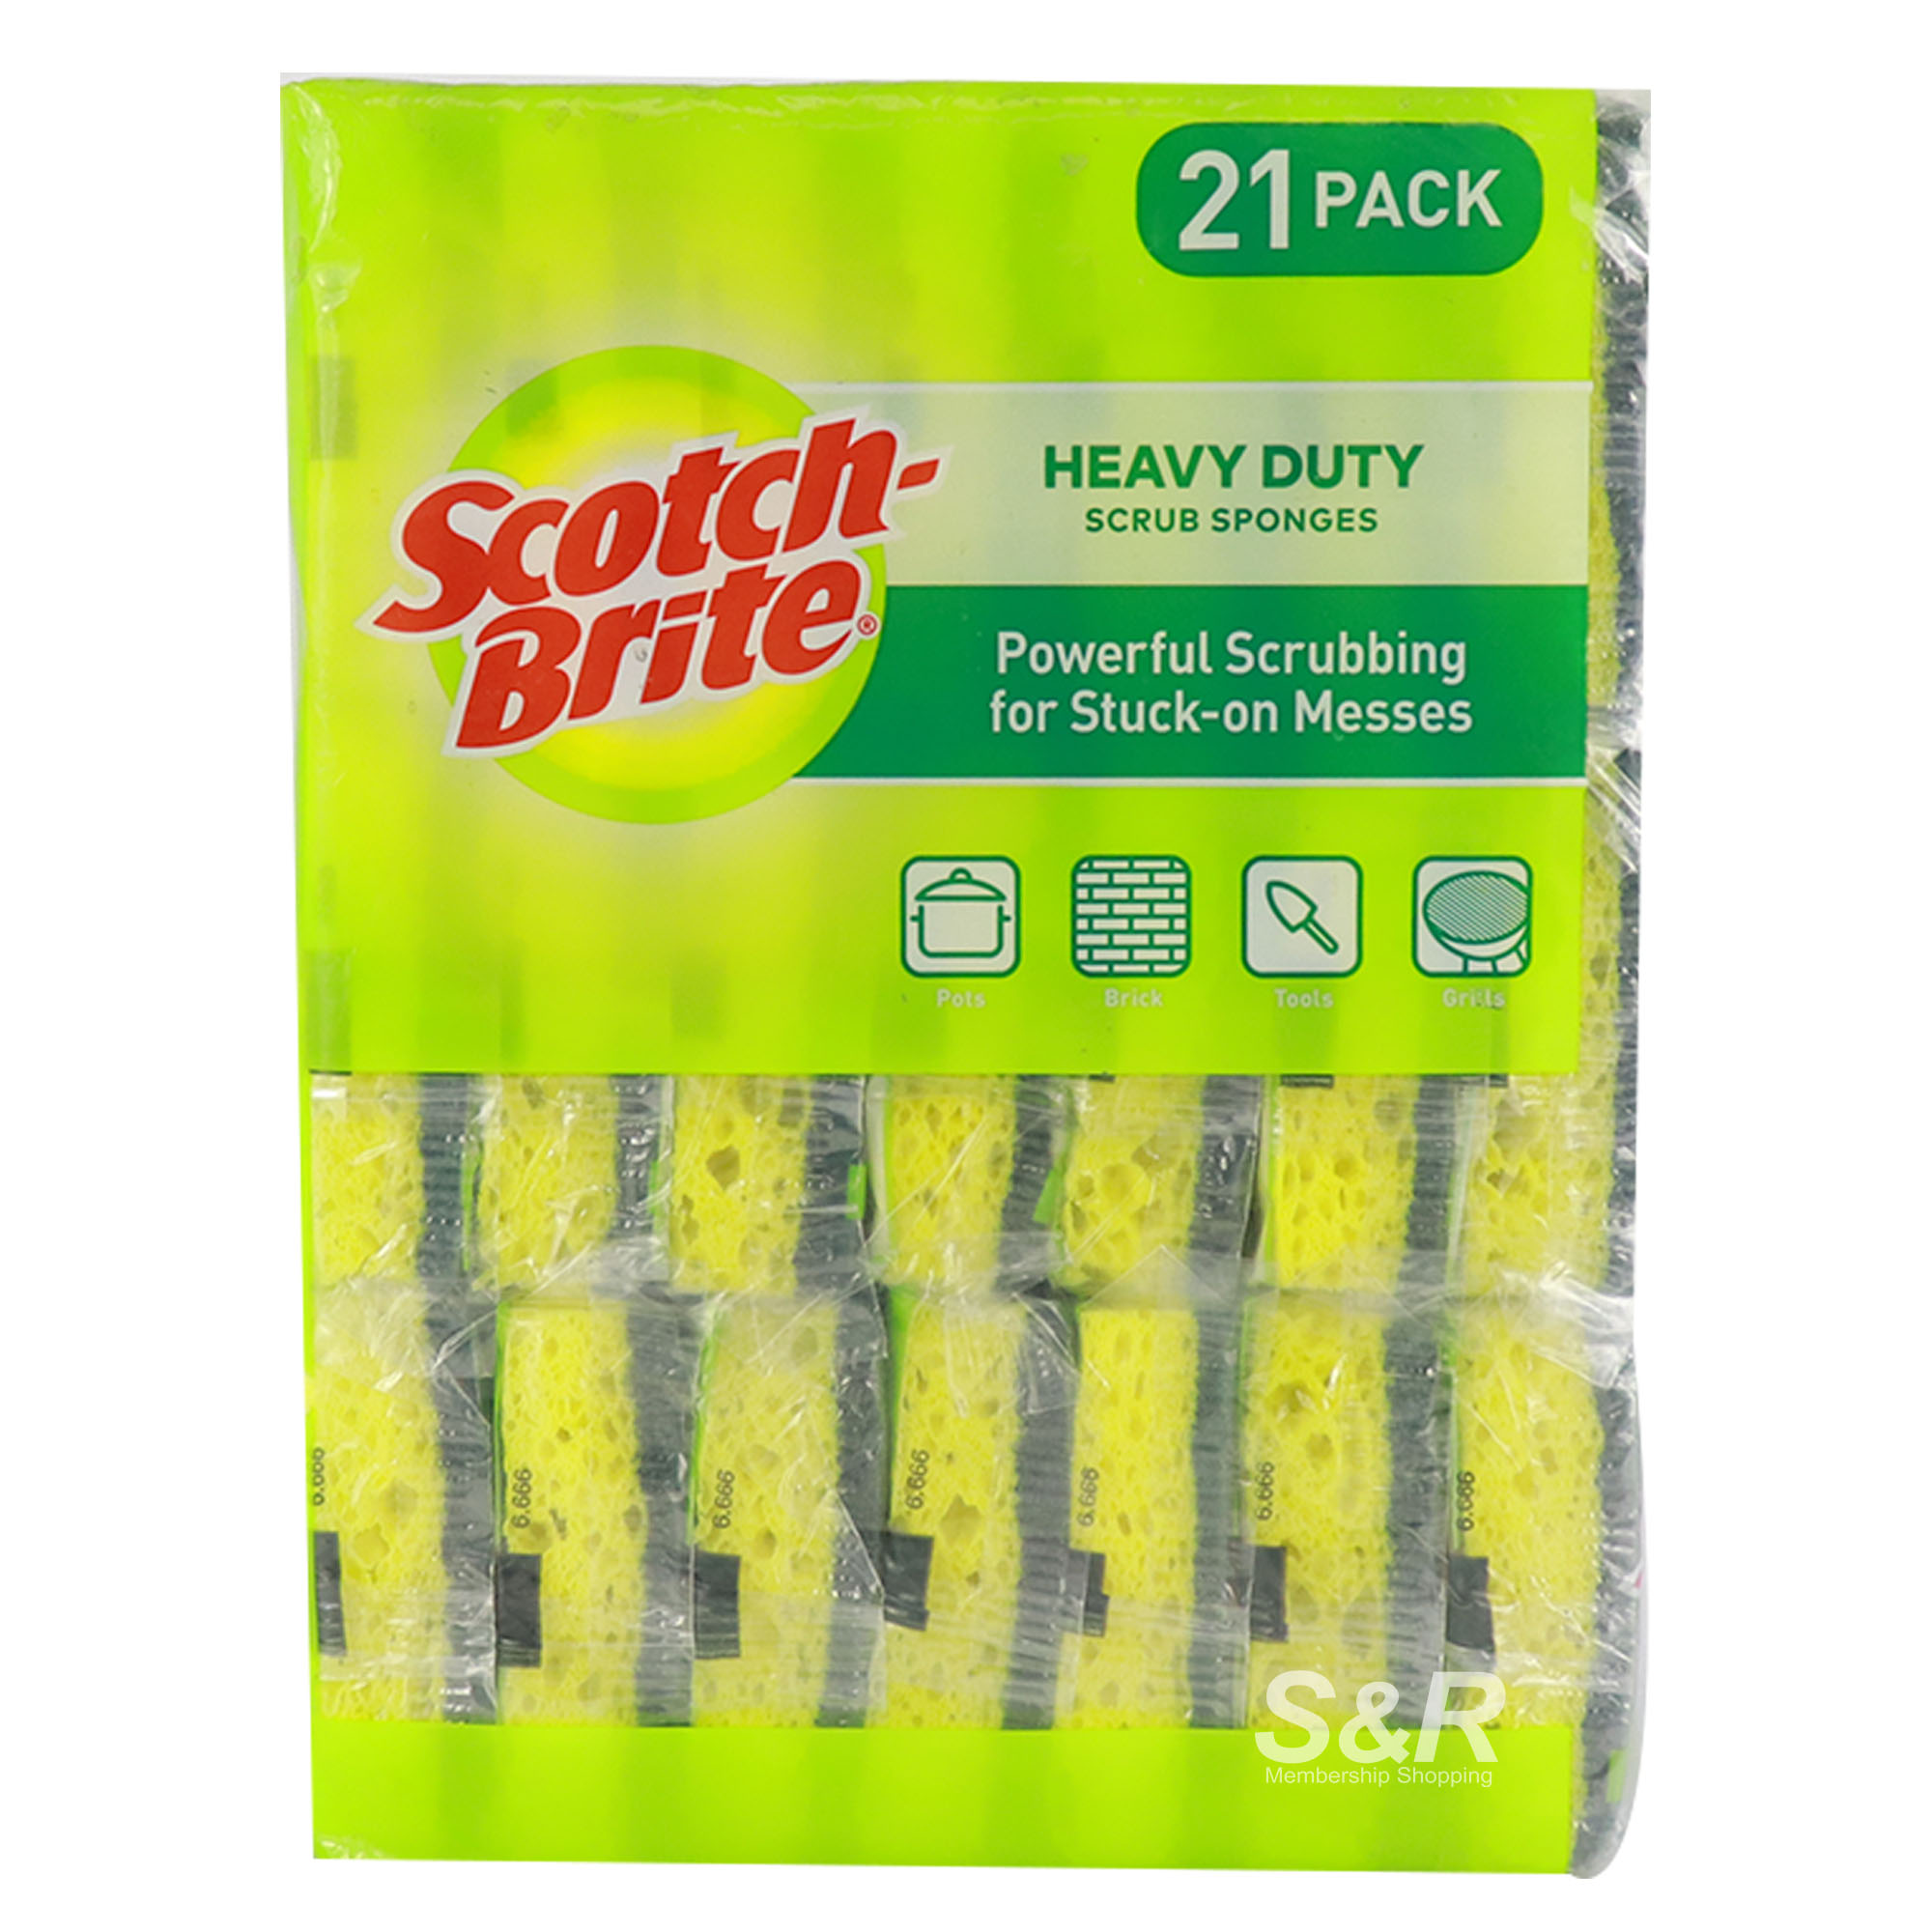 Scotch-Brite Heavy Duty Scrub Sponges 21pcs